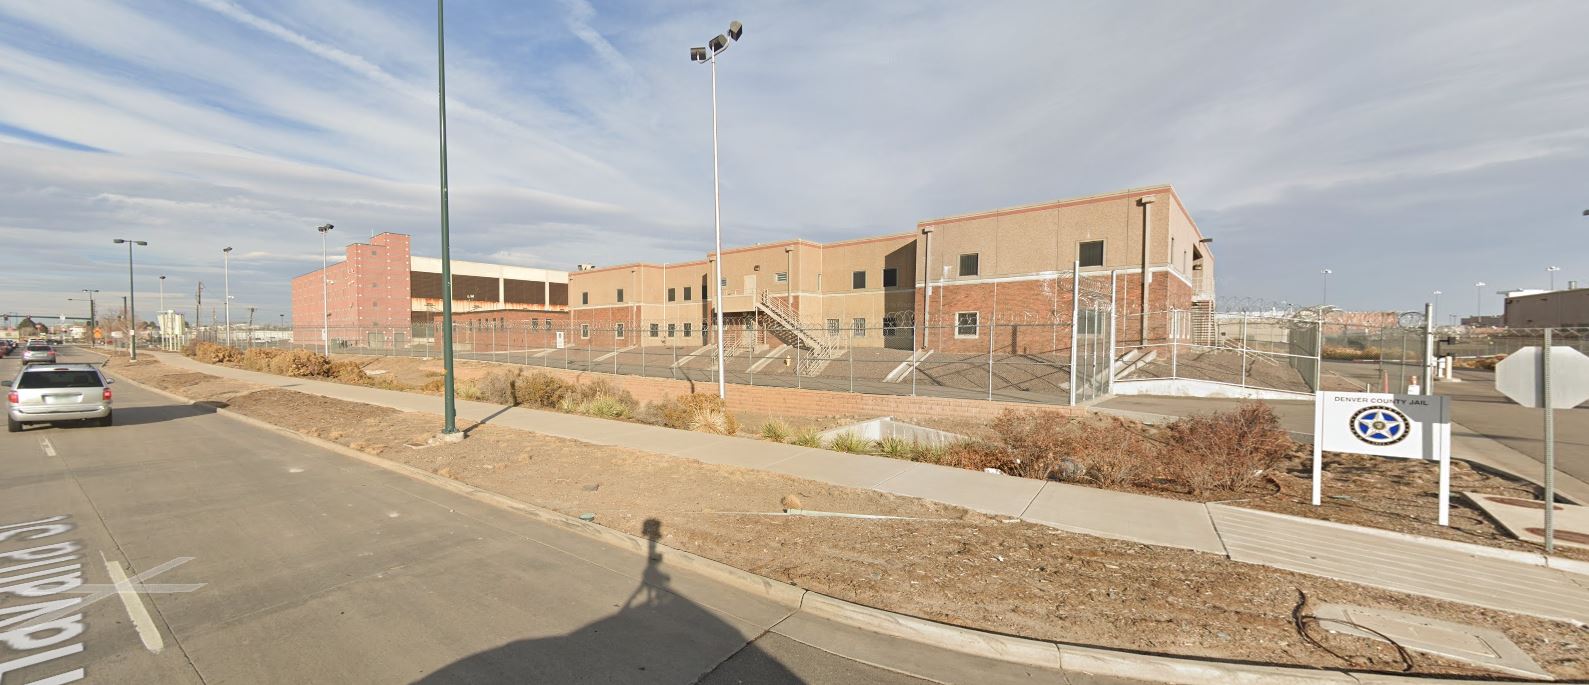 Photos Denver County Jail 2